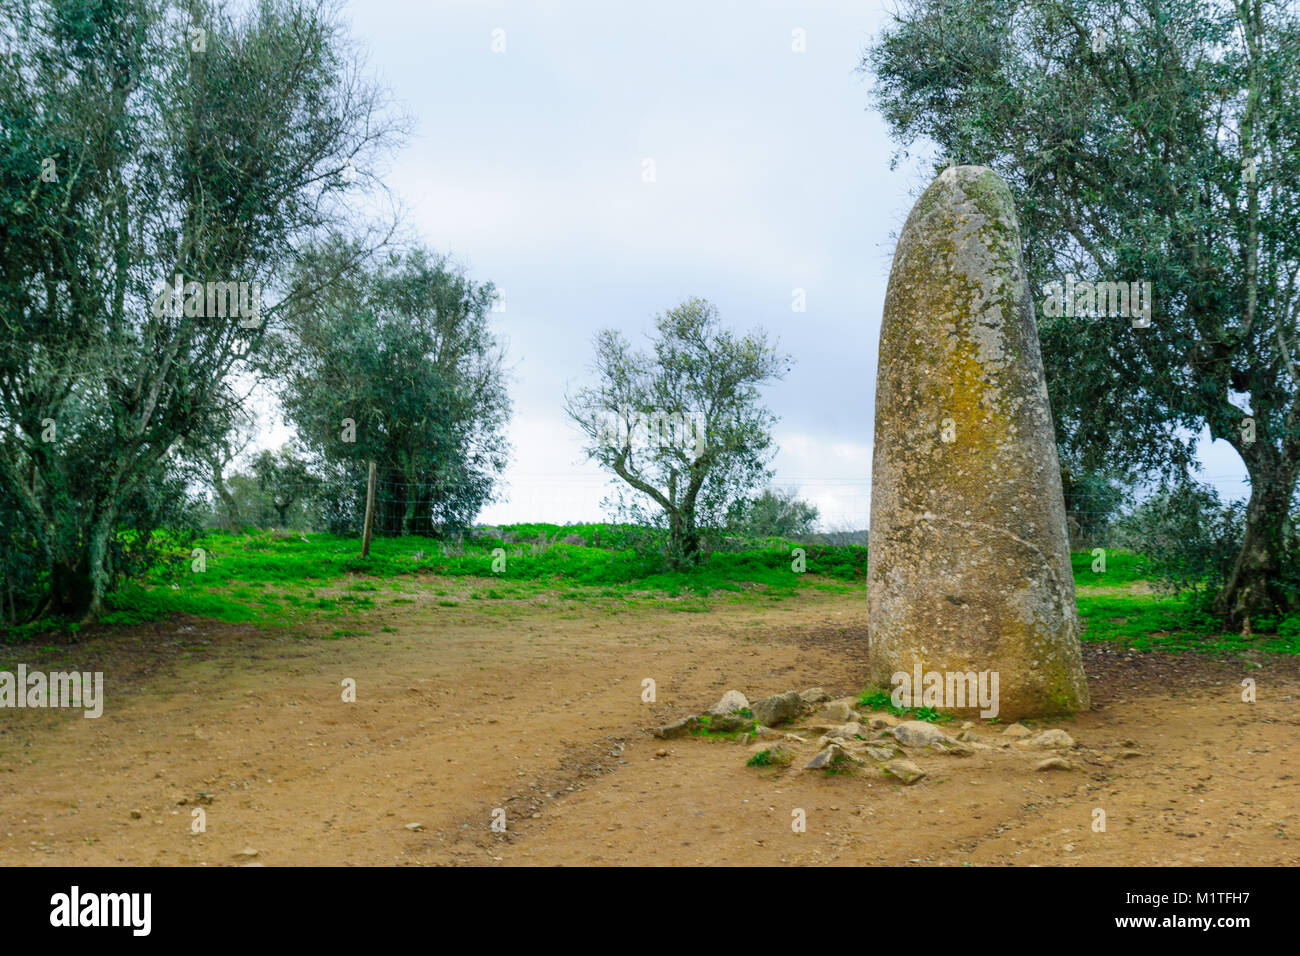 The Menir dos Almendres, megalithic site near the village of Nossa Senhora de Guadalupe, Portugal Stock Photo